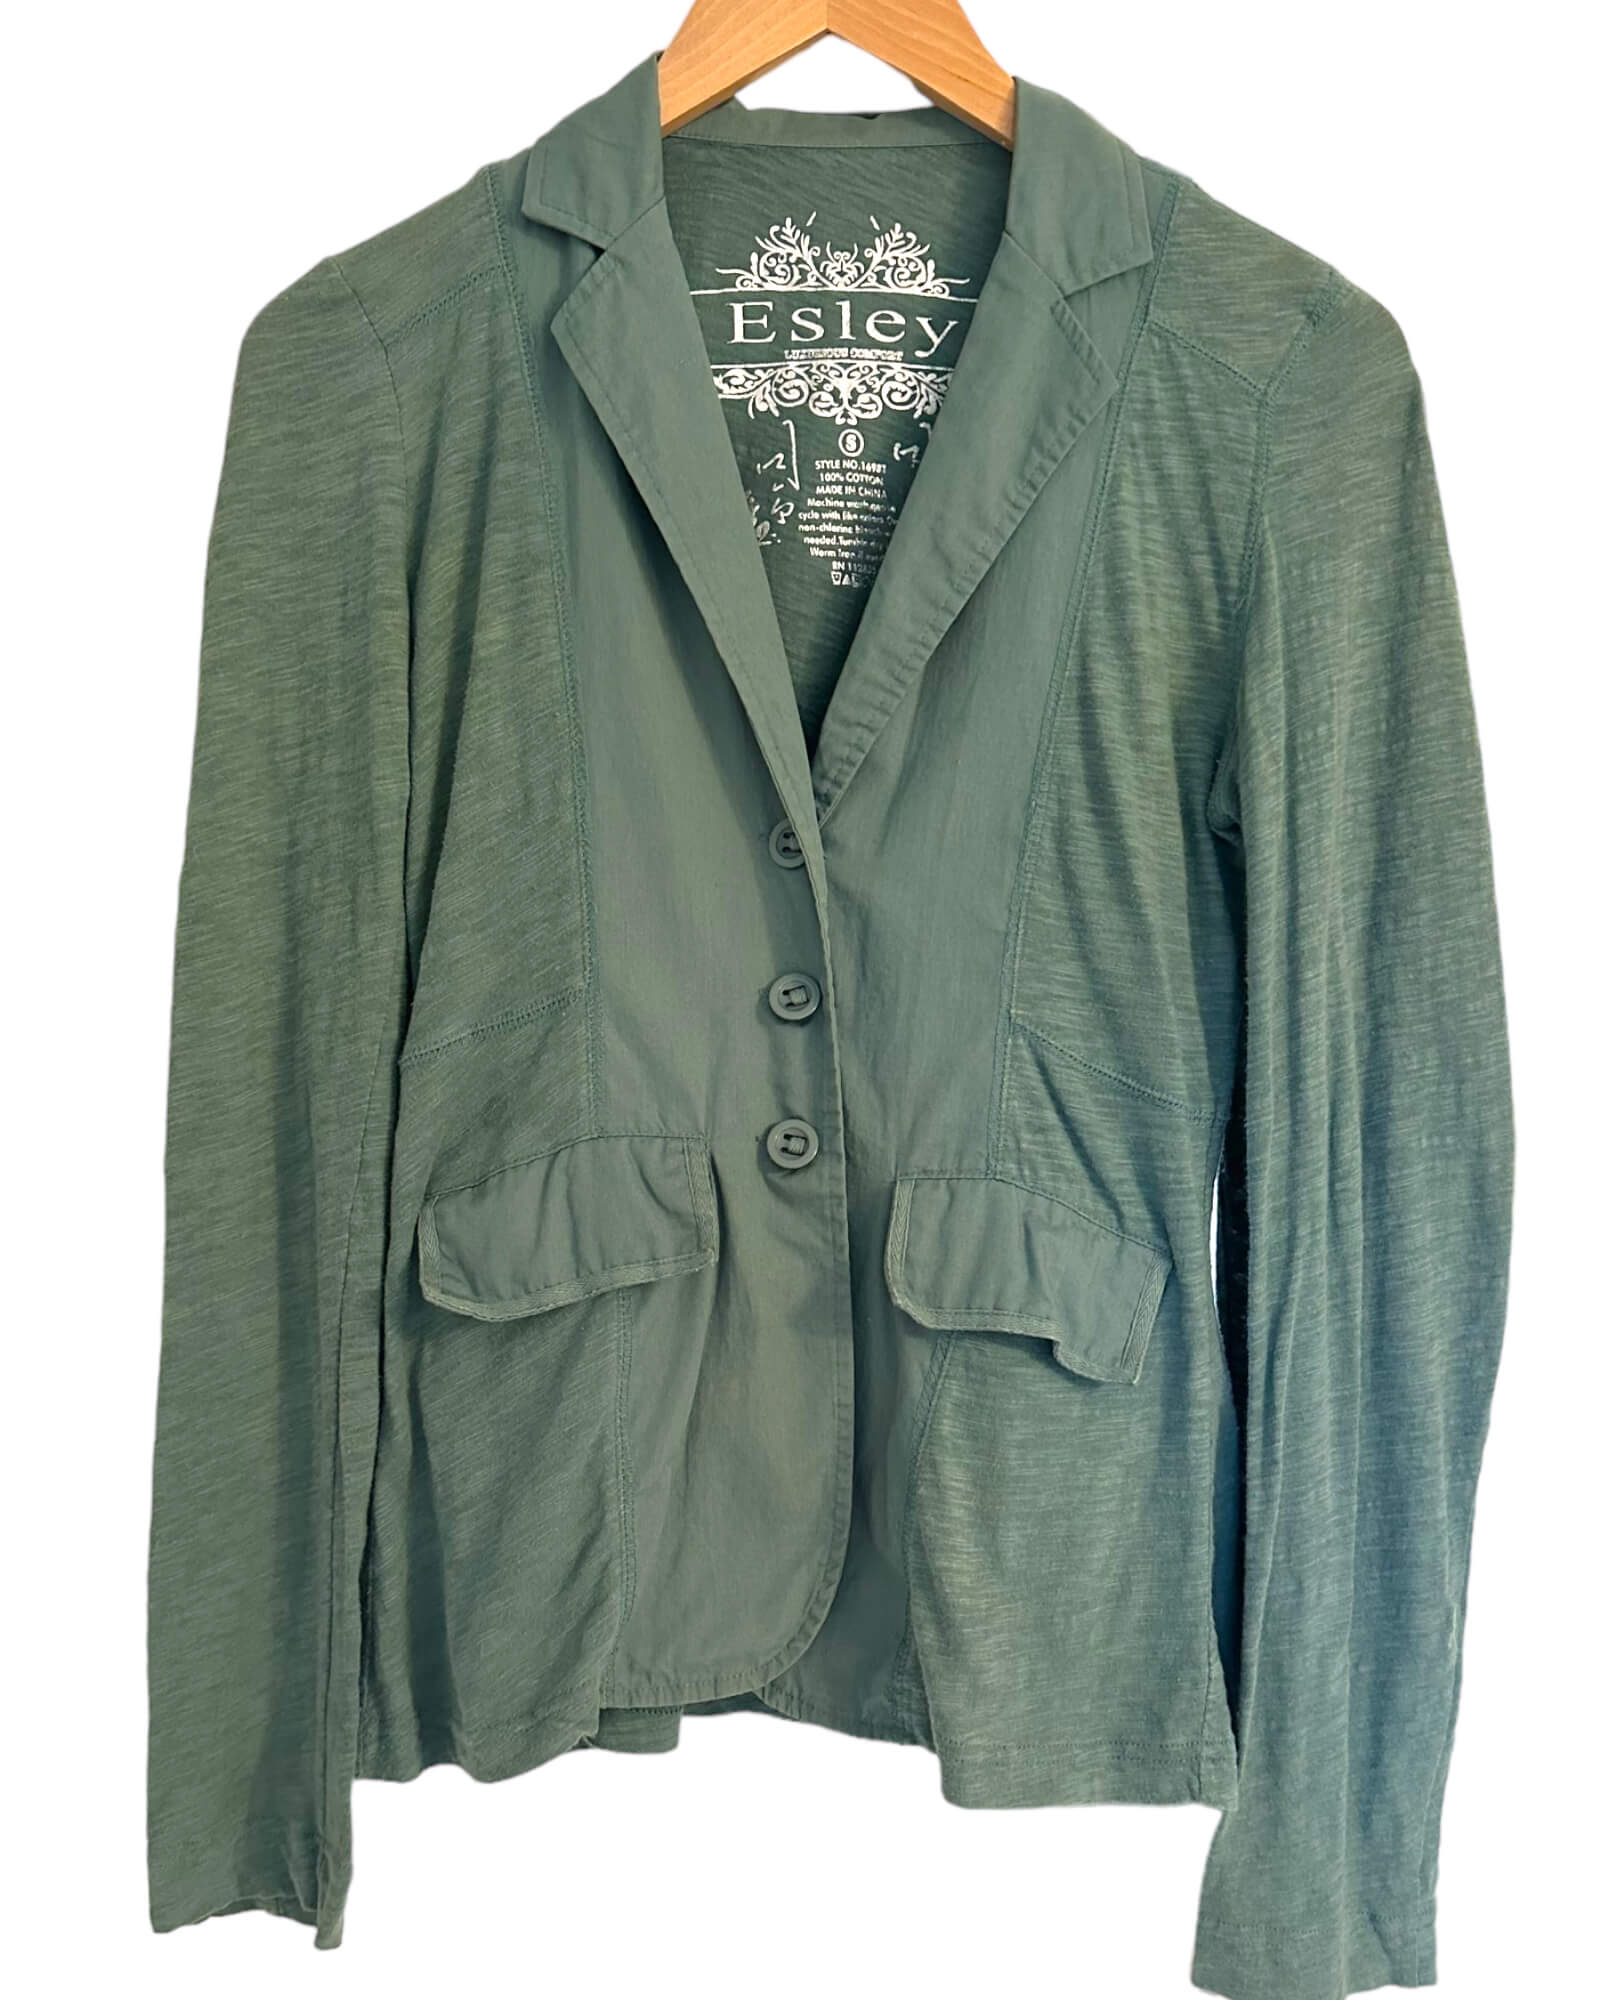 Soft Summer ESLEY dusty sage green jersey knit button jacket